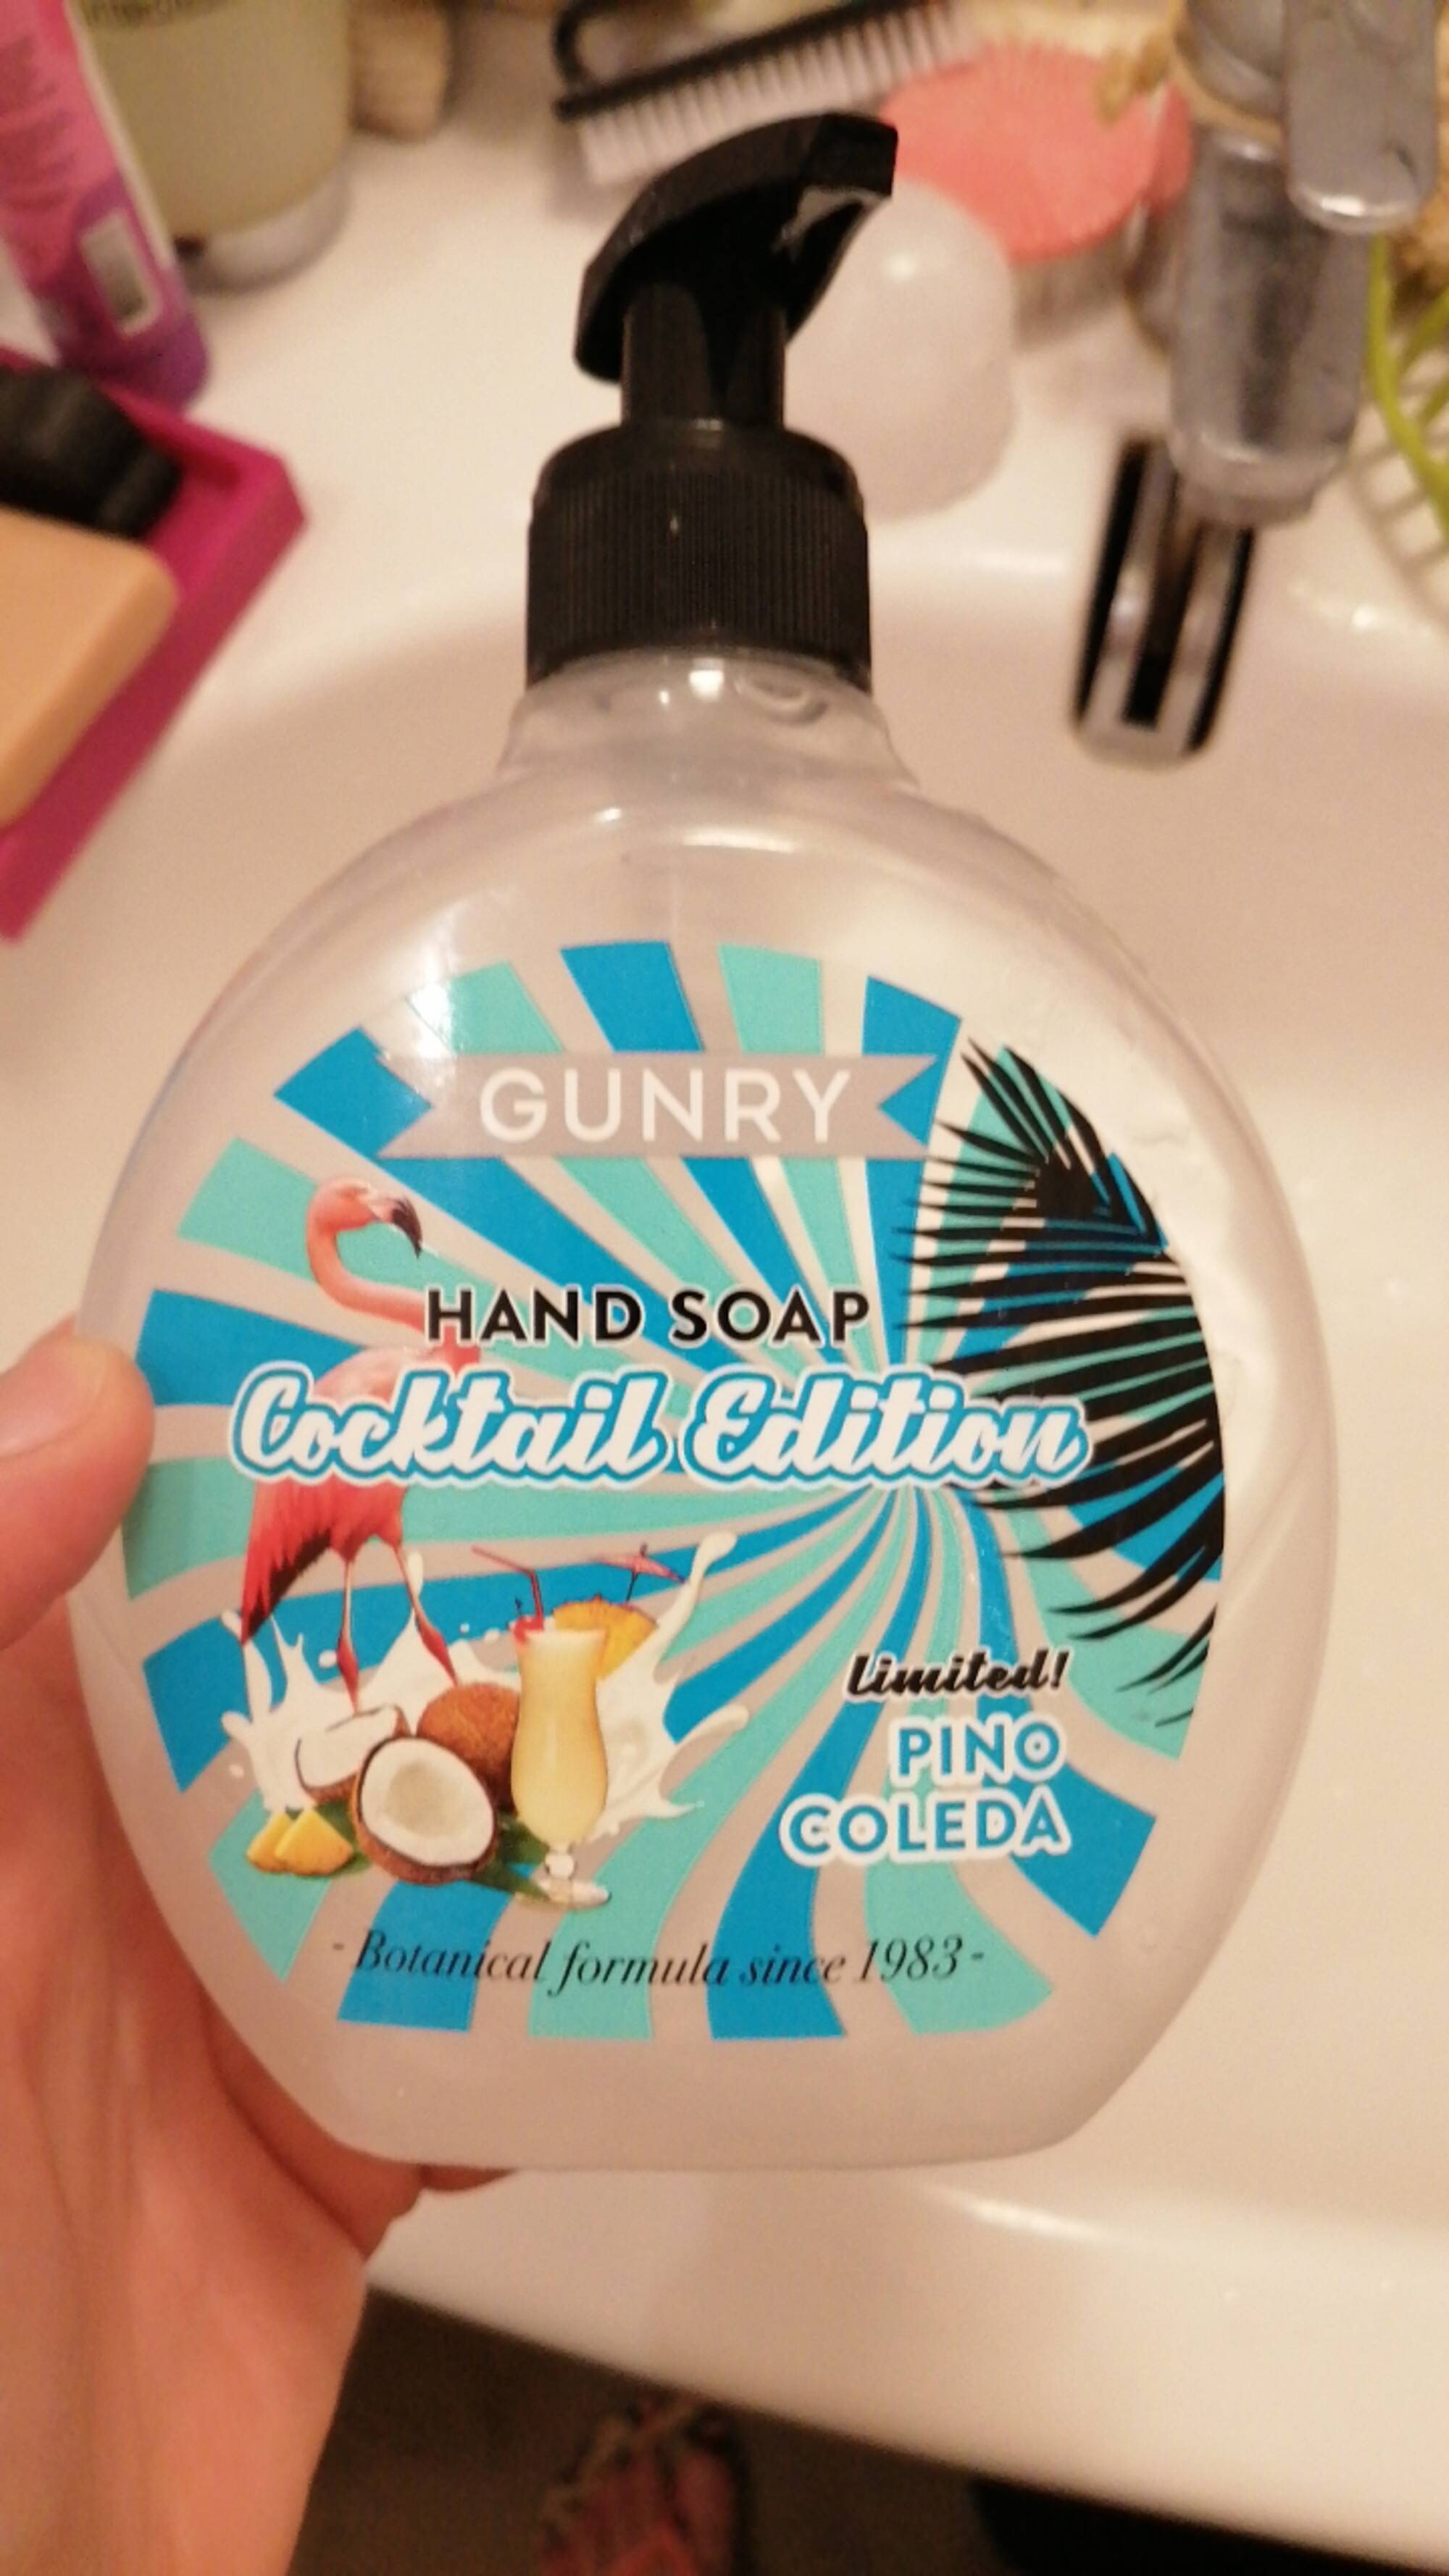 GUNRY - Coktail édition - Hand soap 